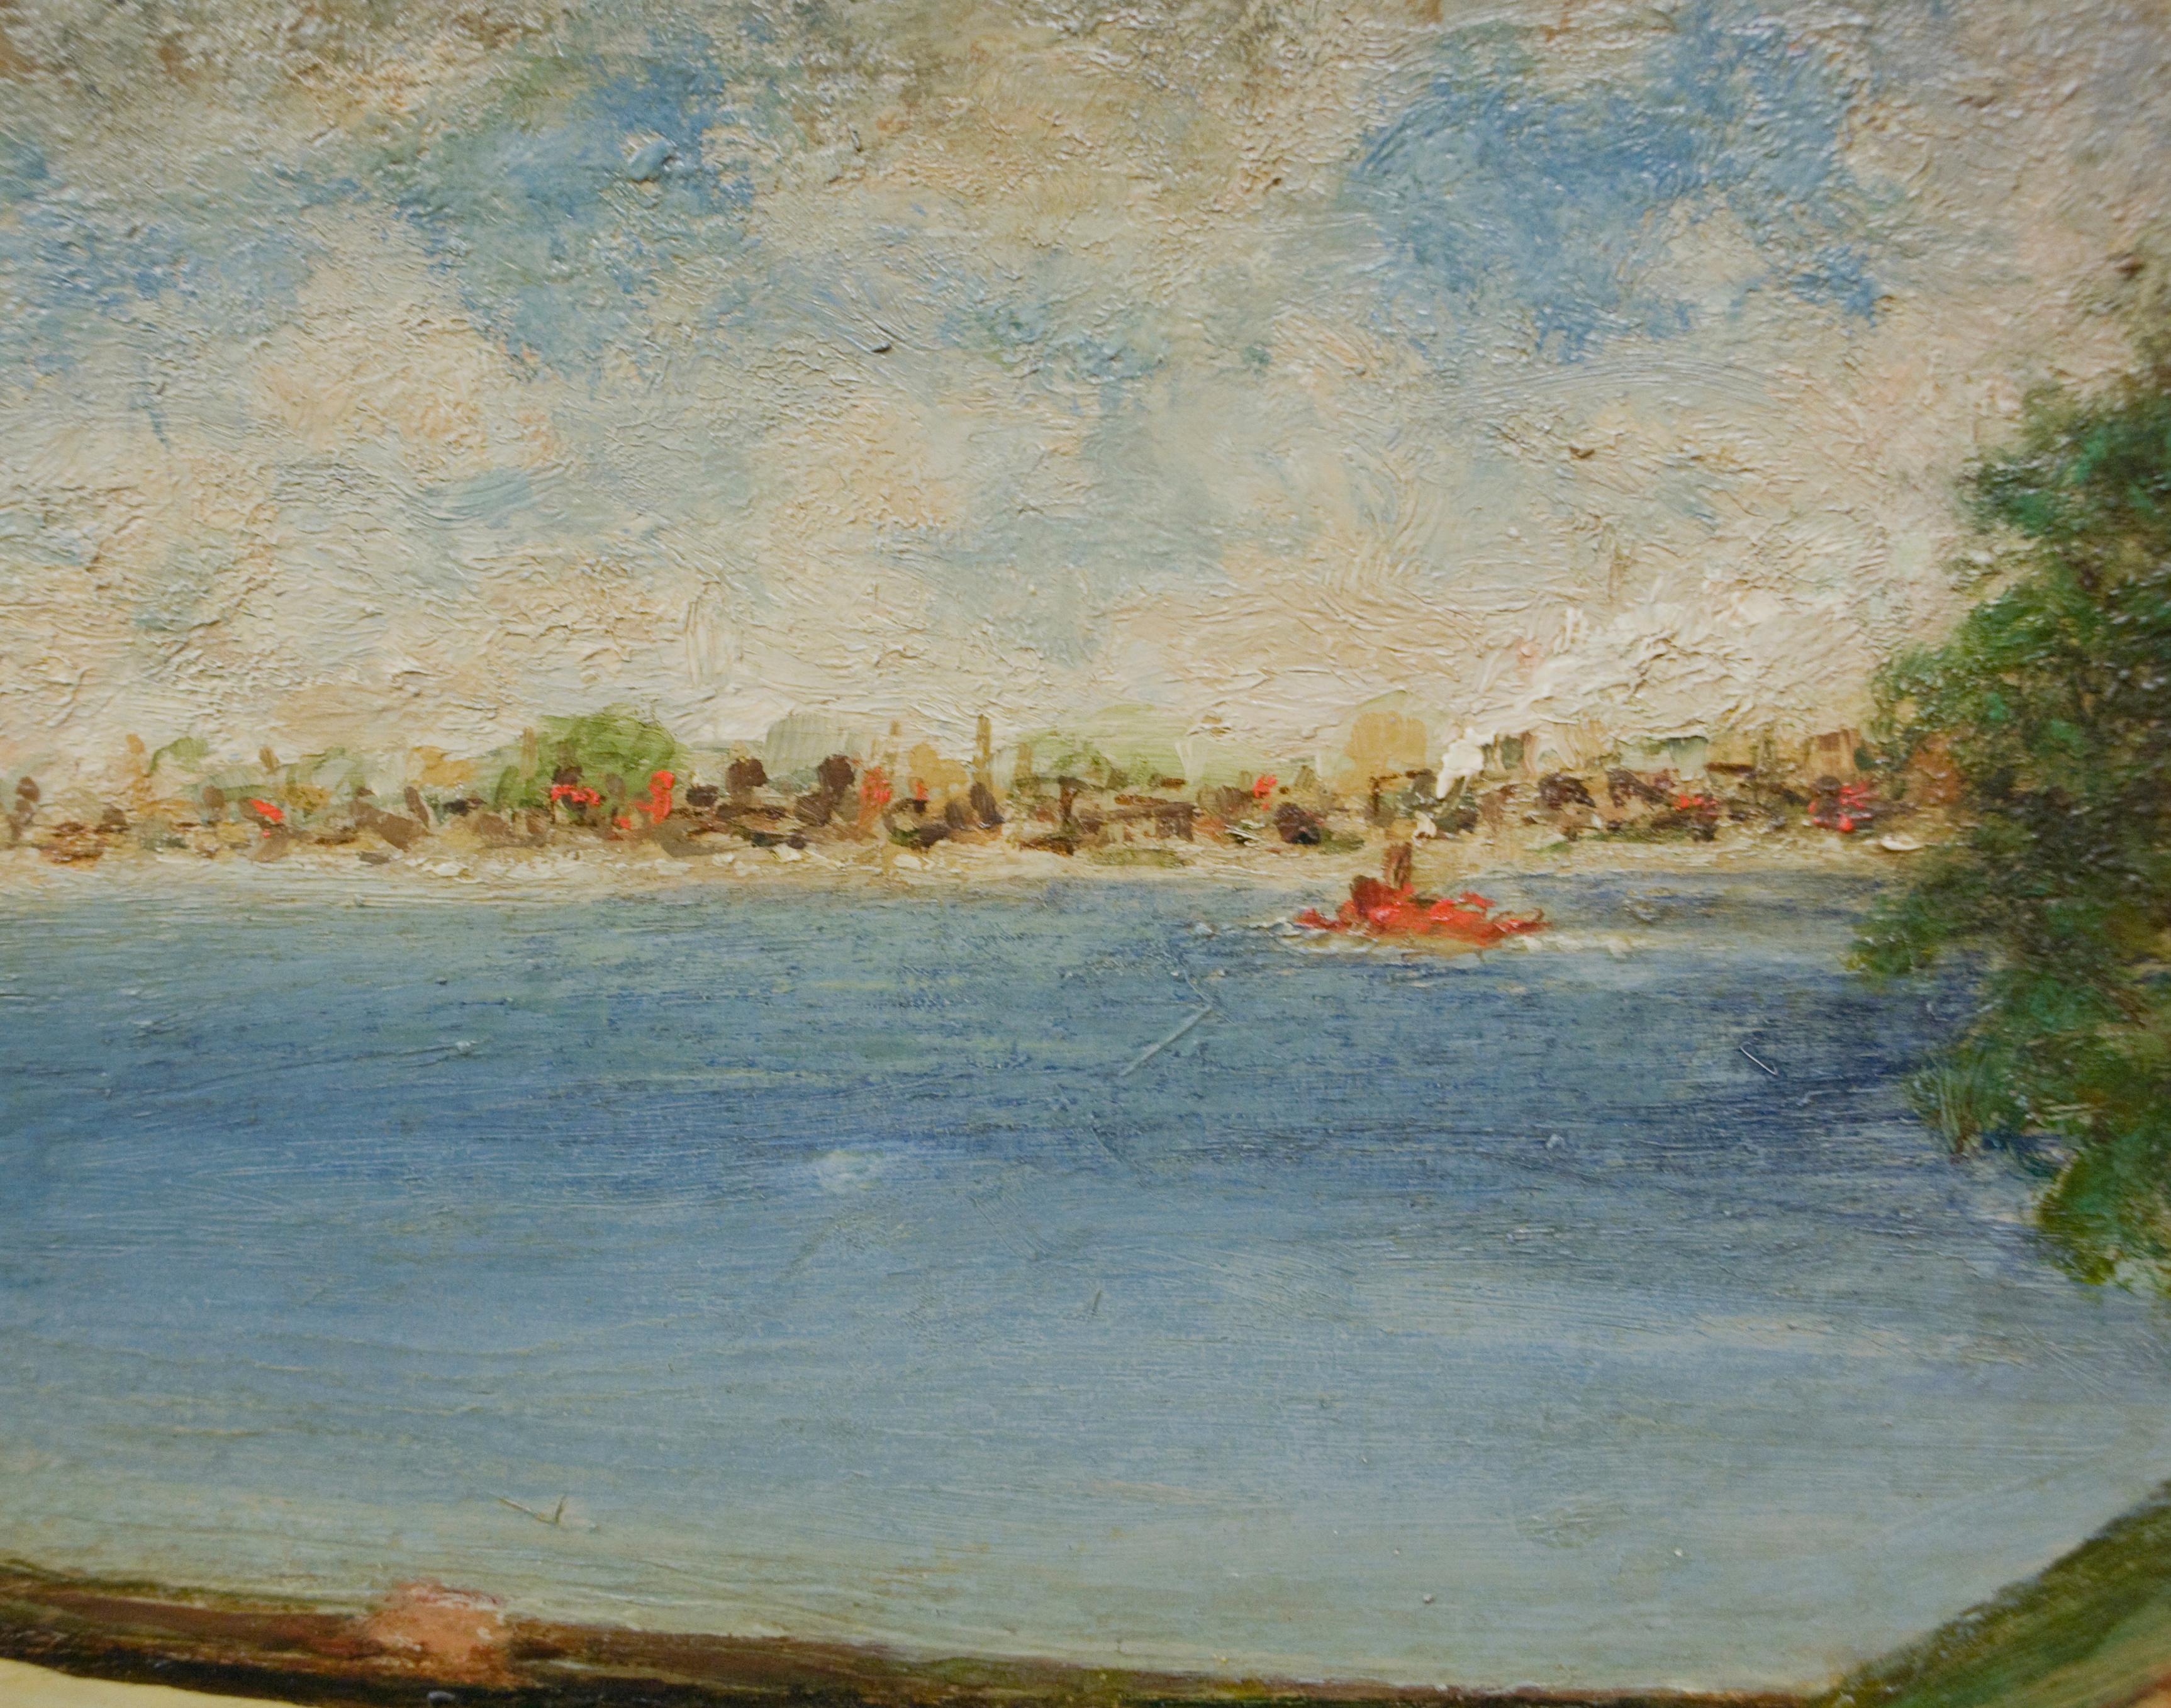 Untitled (Red Wheelbarrow), New York Harbor Scene - Painting by Arnold Friedman